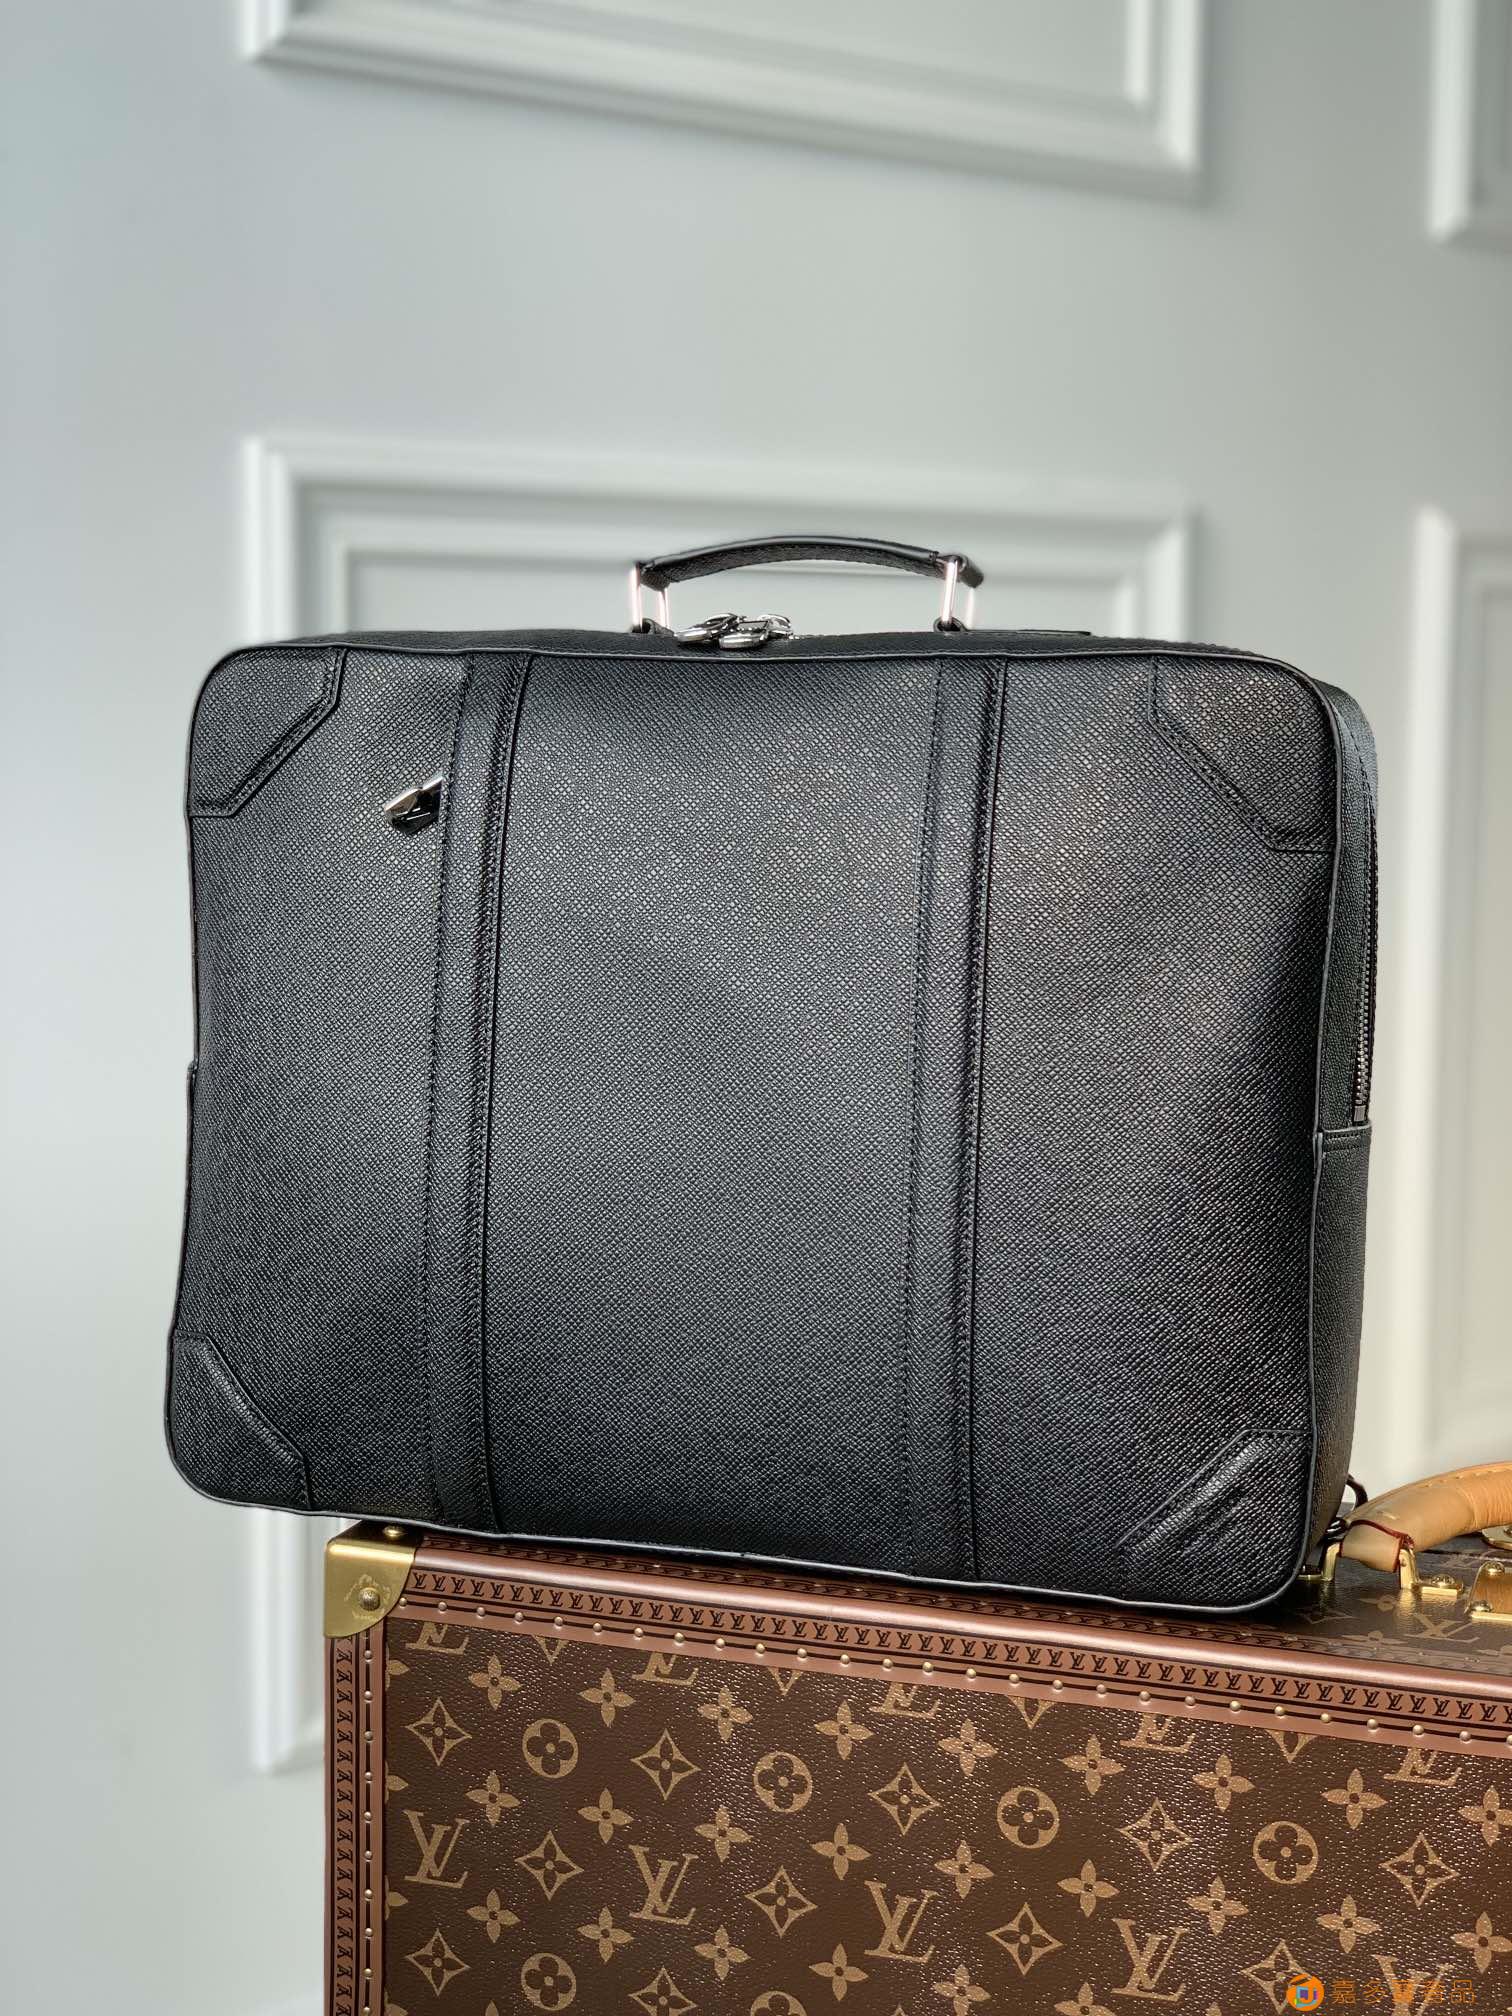 Briefcase旅行包,空间充裕,摩登实用,适合男士商务旅